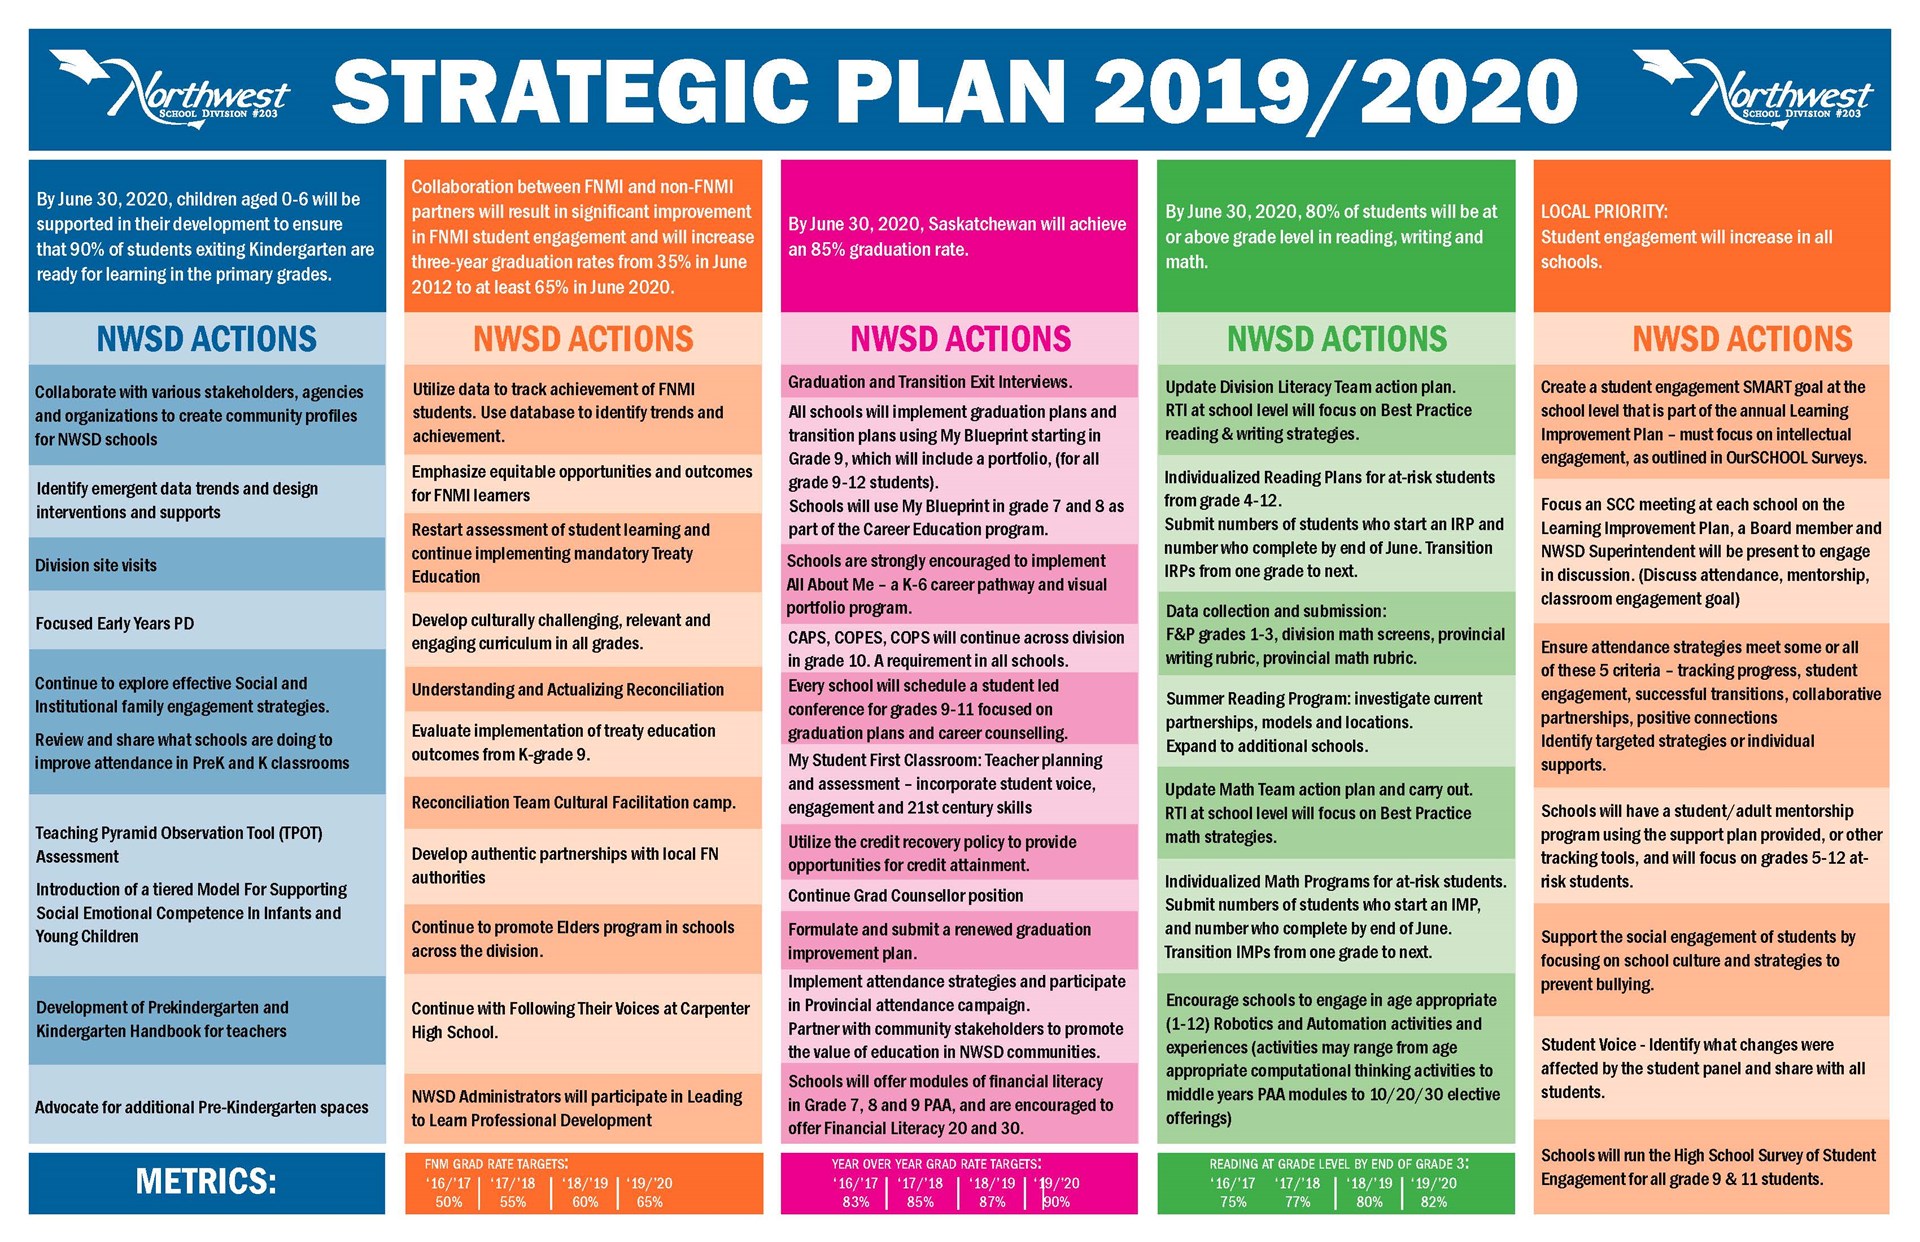 strategic plan on education